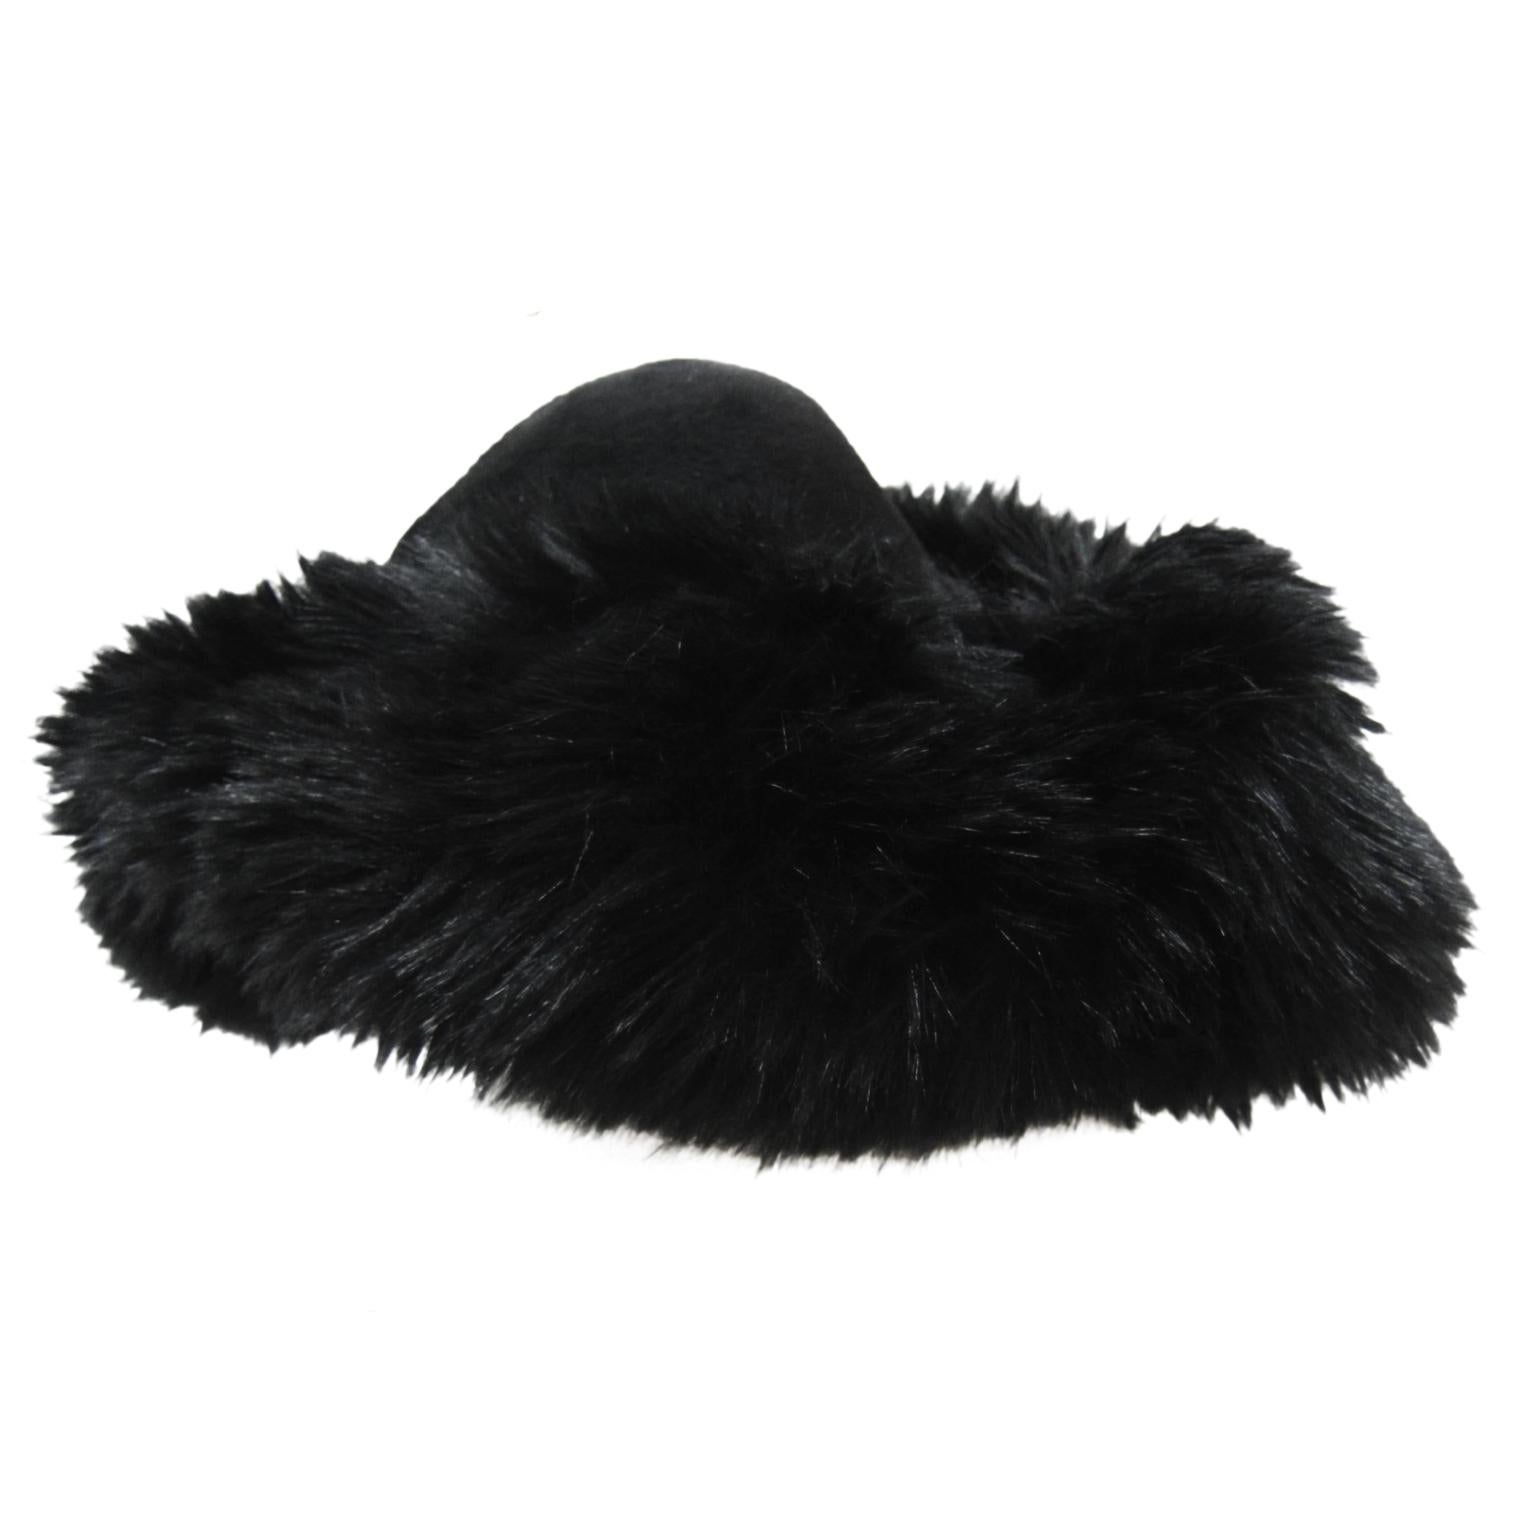 Black Yohji Yamamoto Wide Brim Faux Fur Hat circa AW 2013